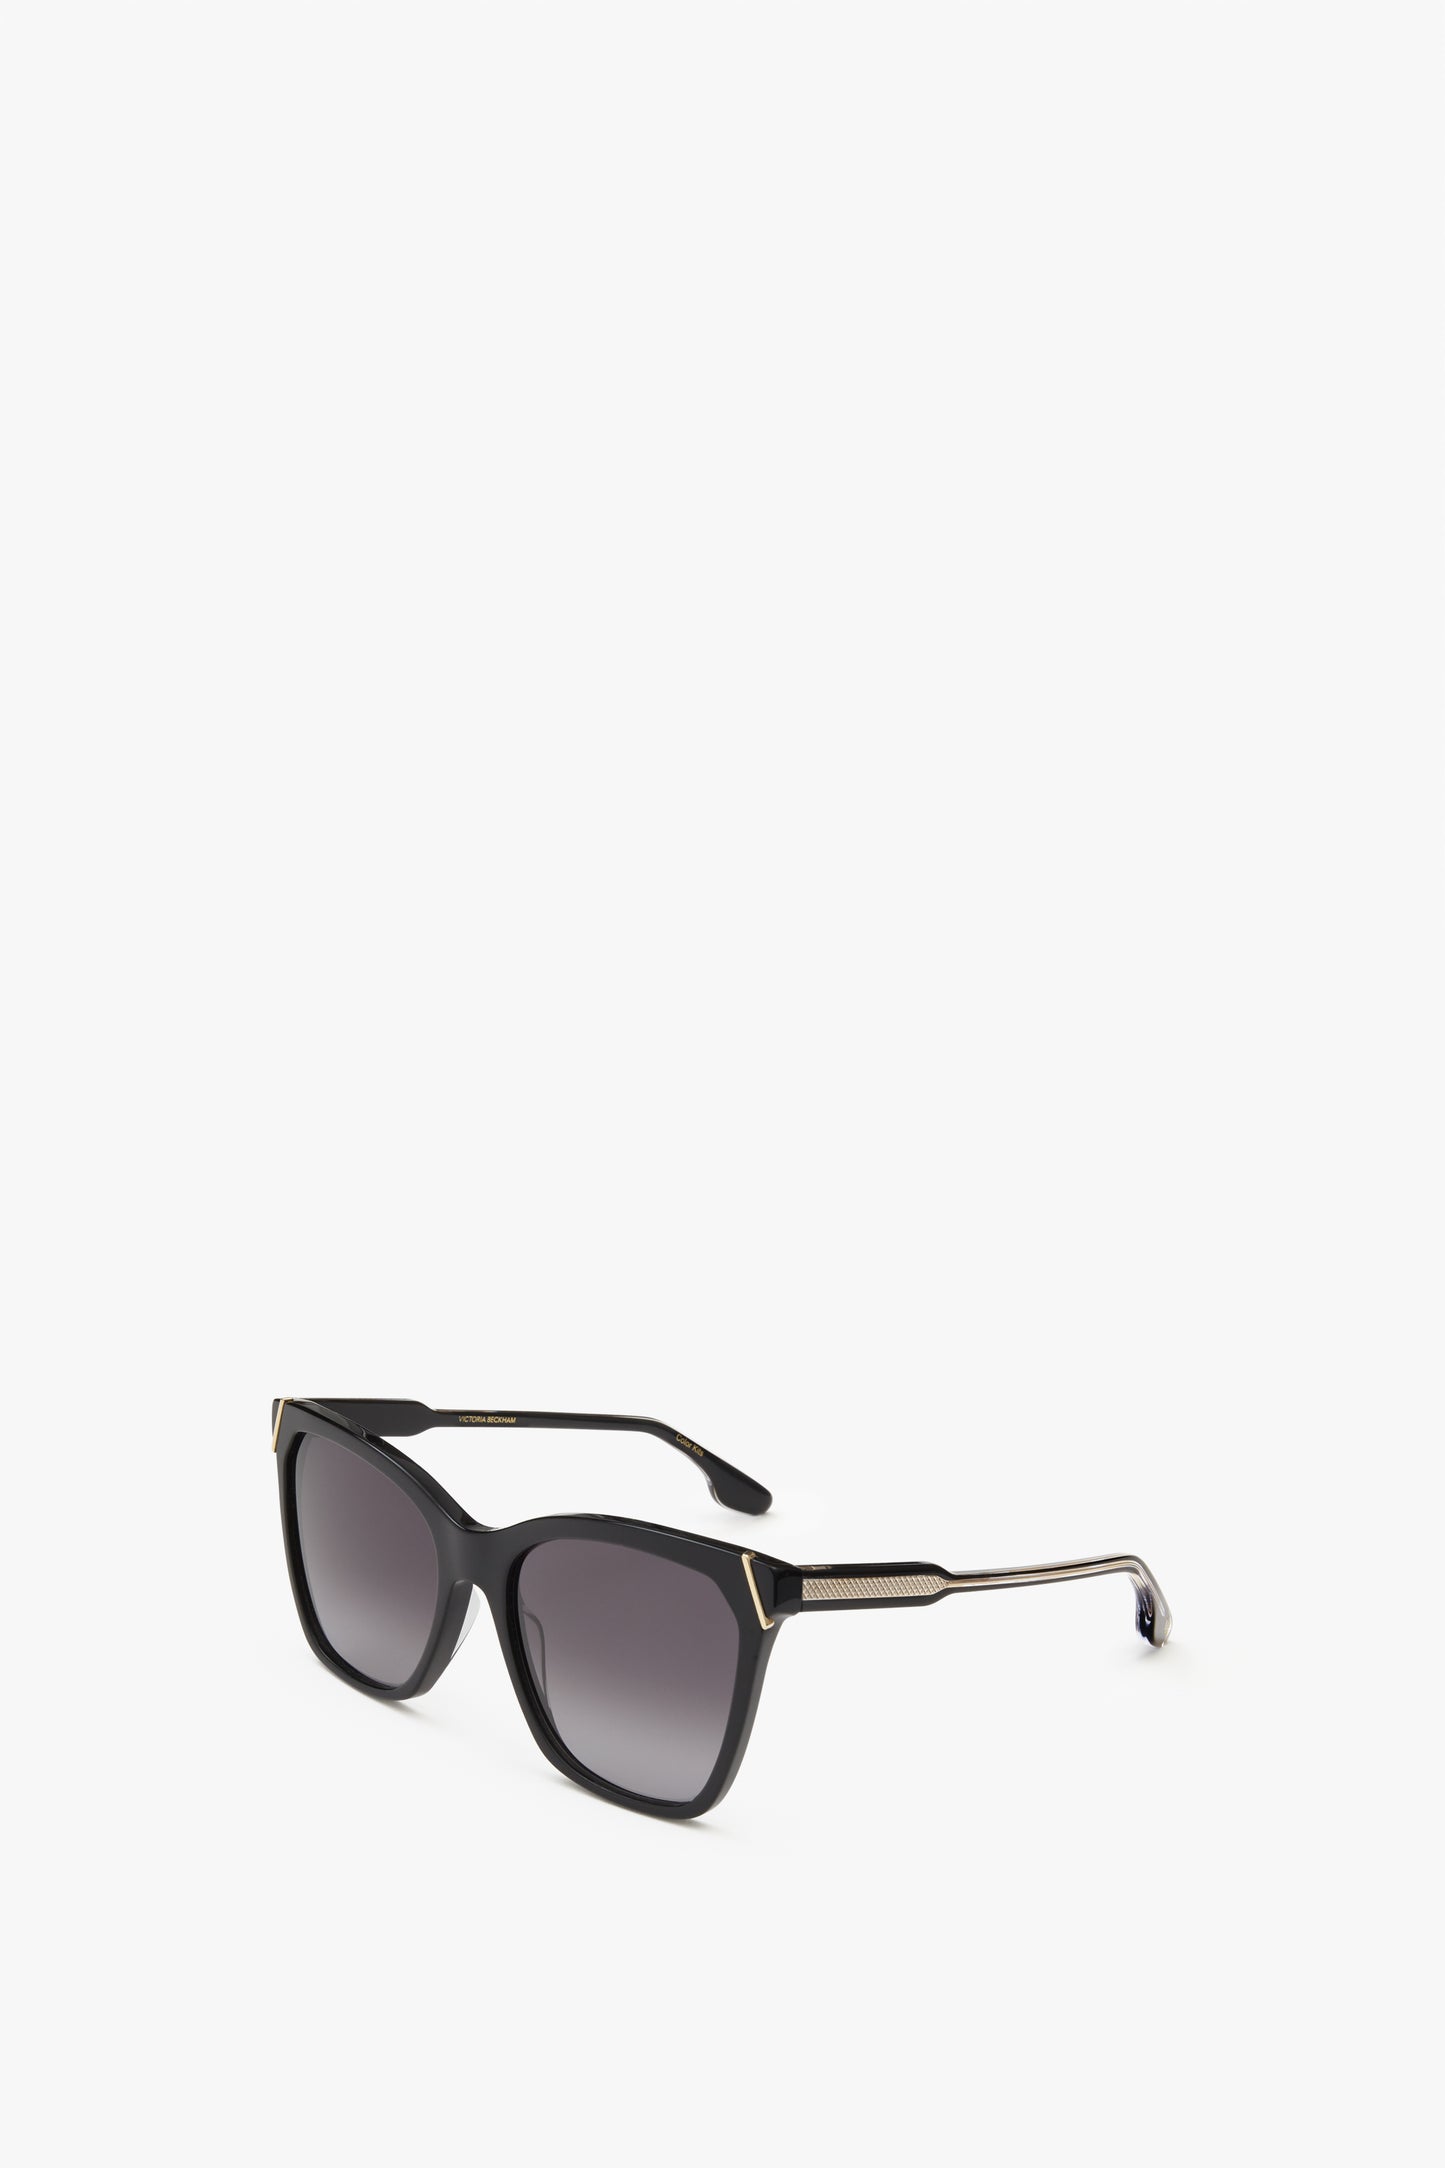 Squared Cat Eye Sunglasses in Black-Grey